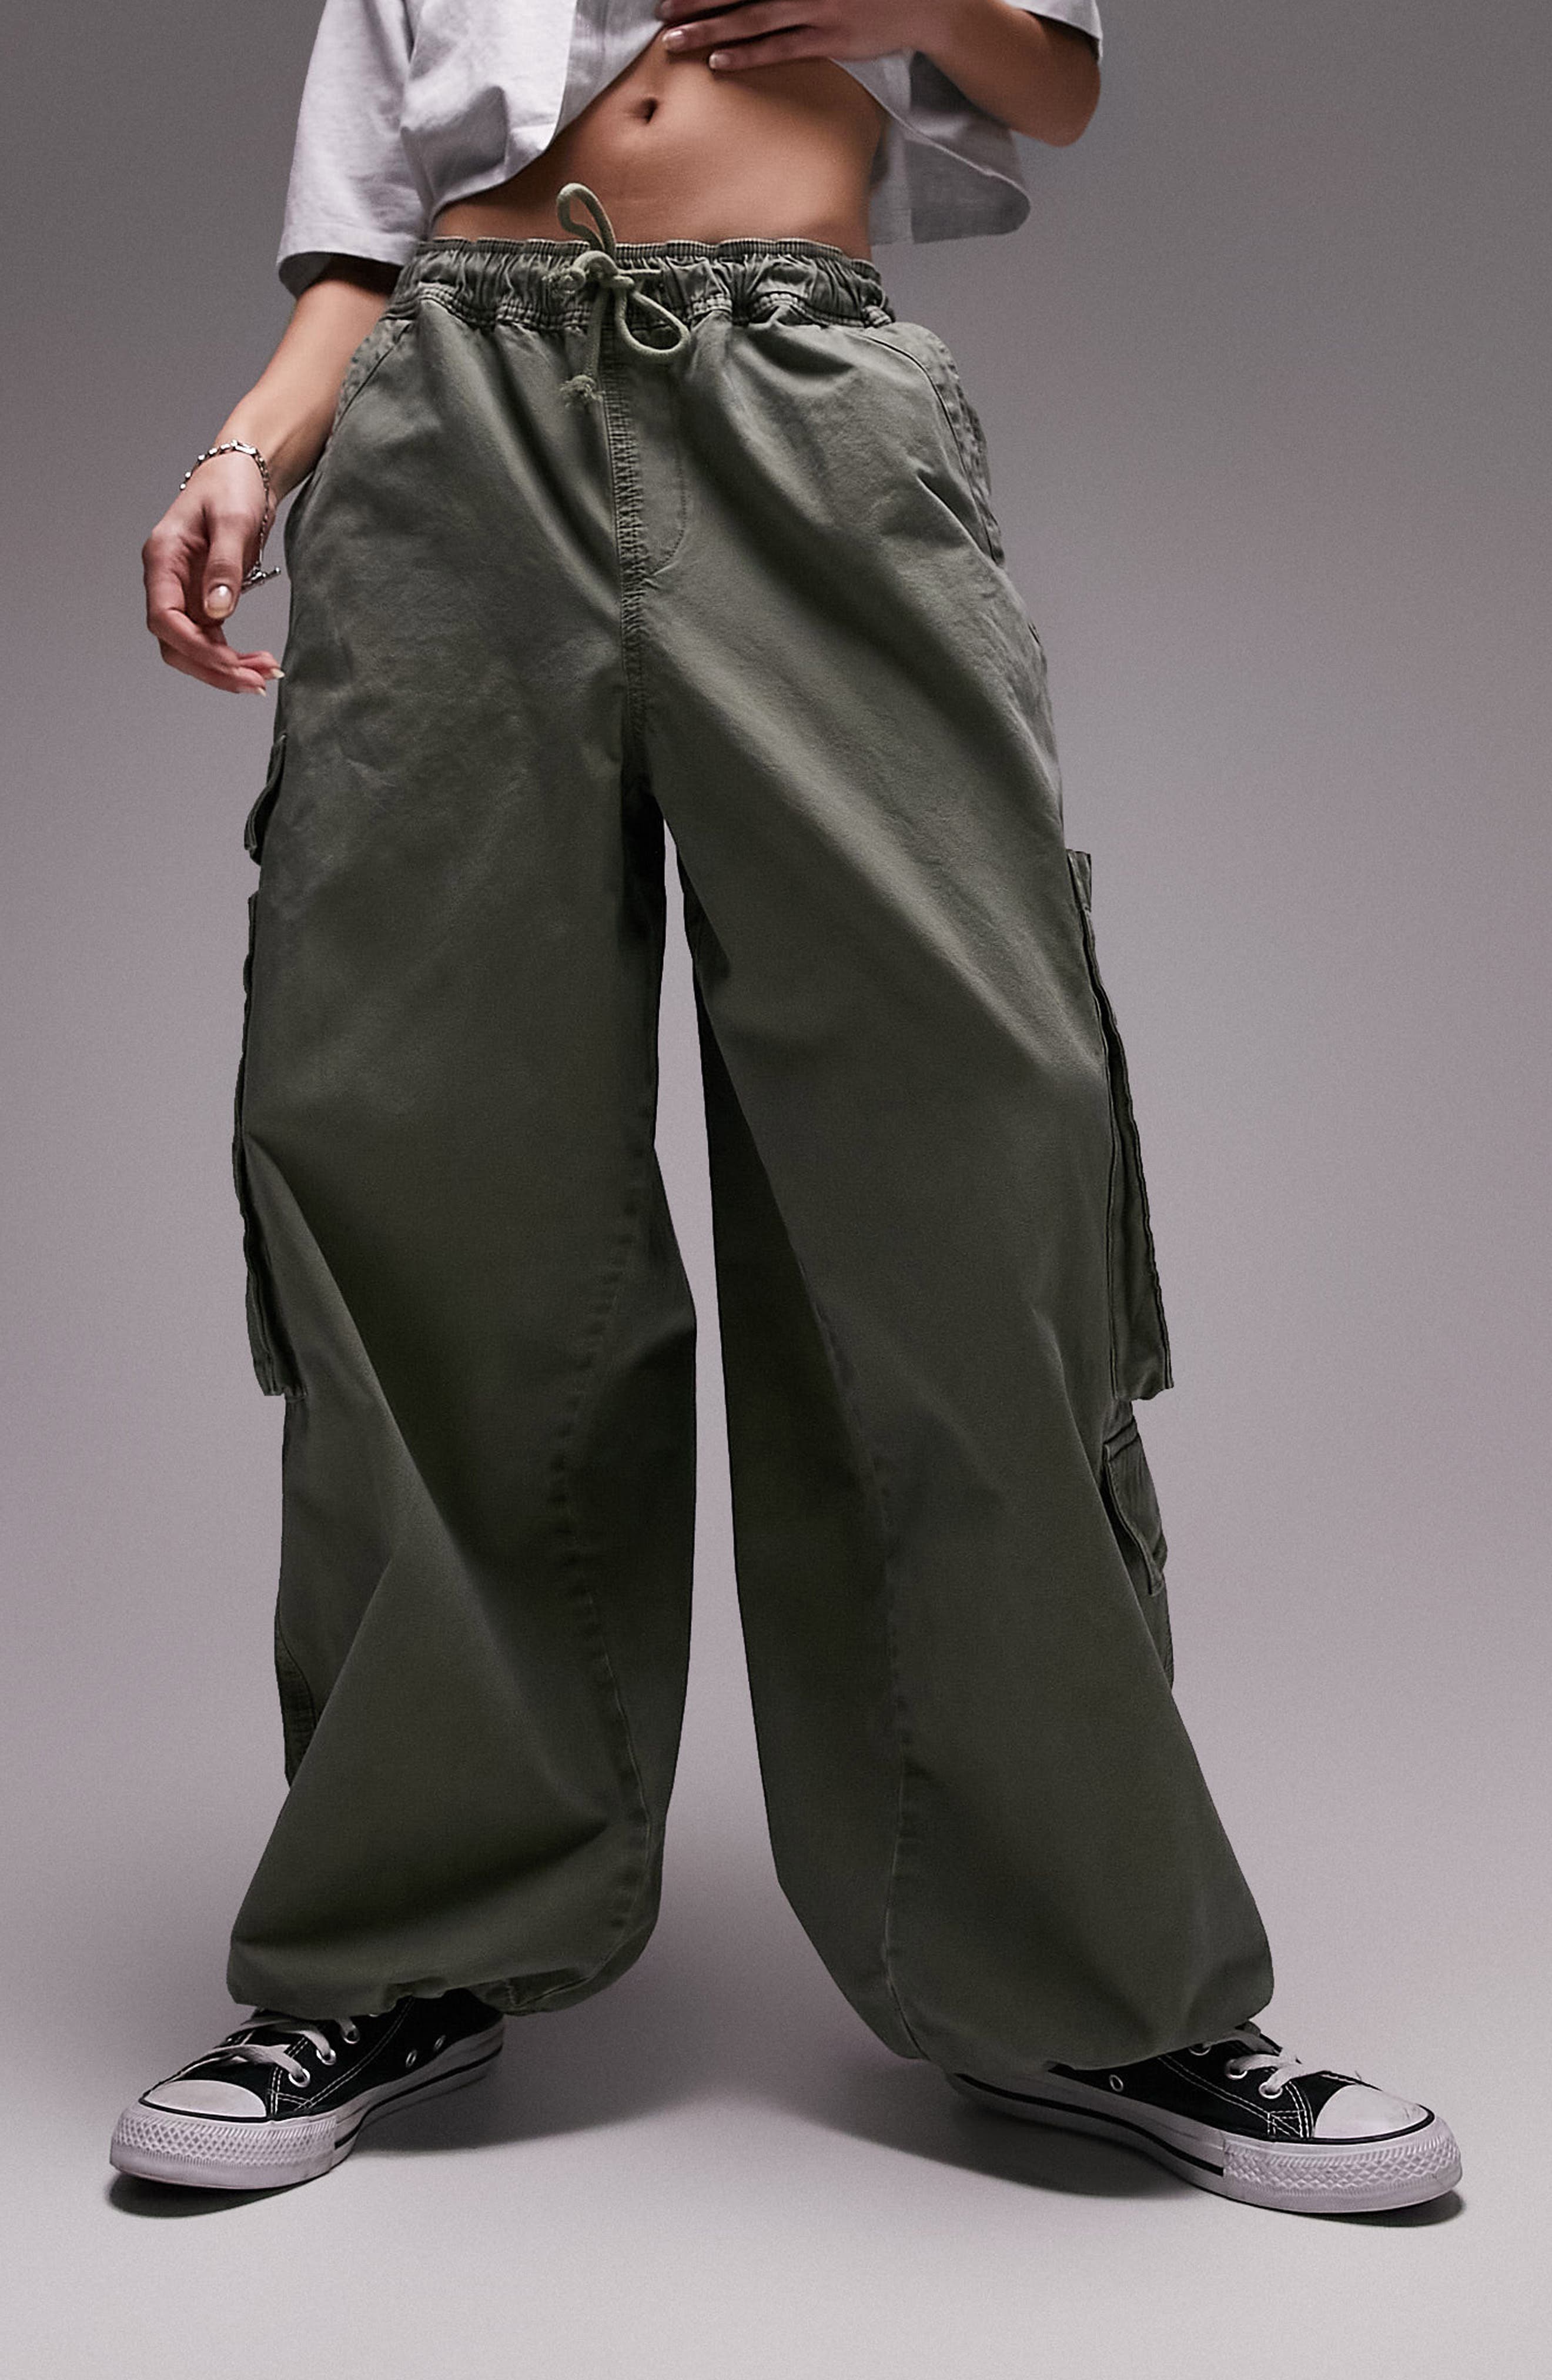 J Lo Wears Baggy Denim Cargo Pants With Oversize Pockets  POPSUGAR Fashion  UK